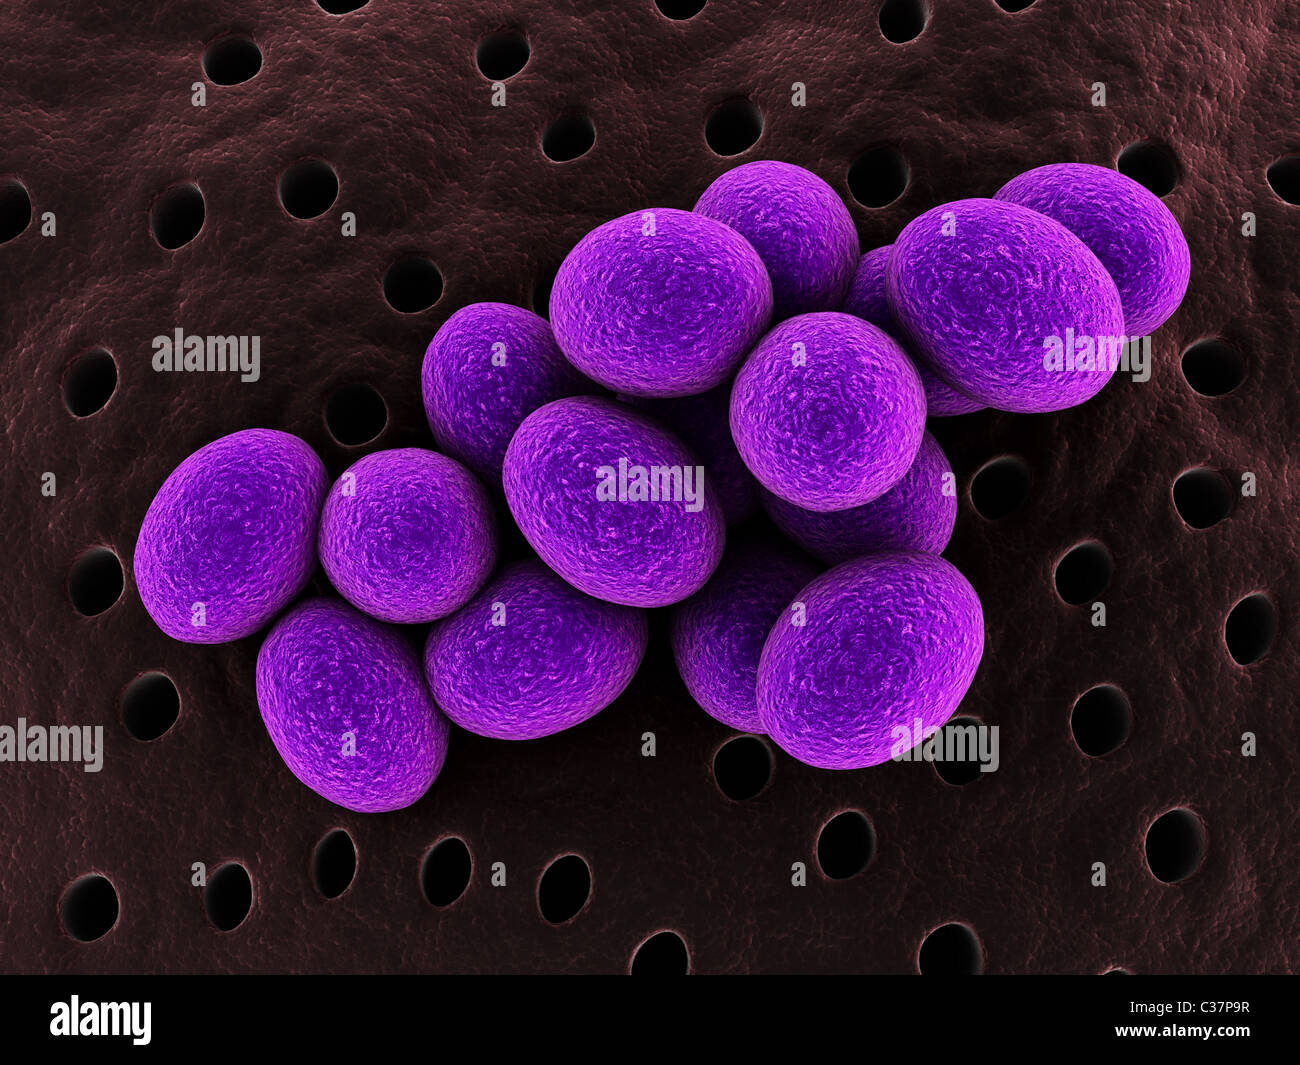 Staphylococcus Foto de stock